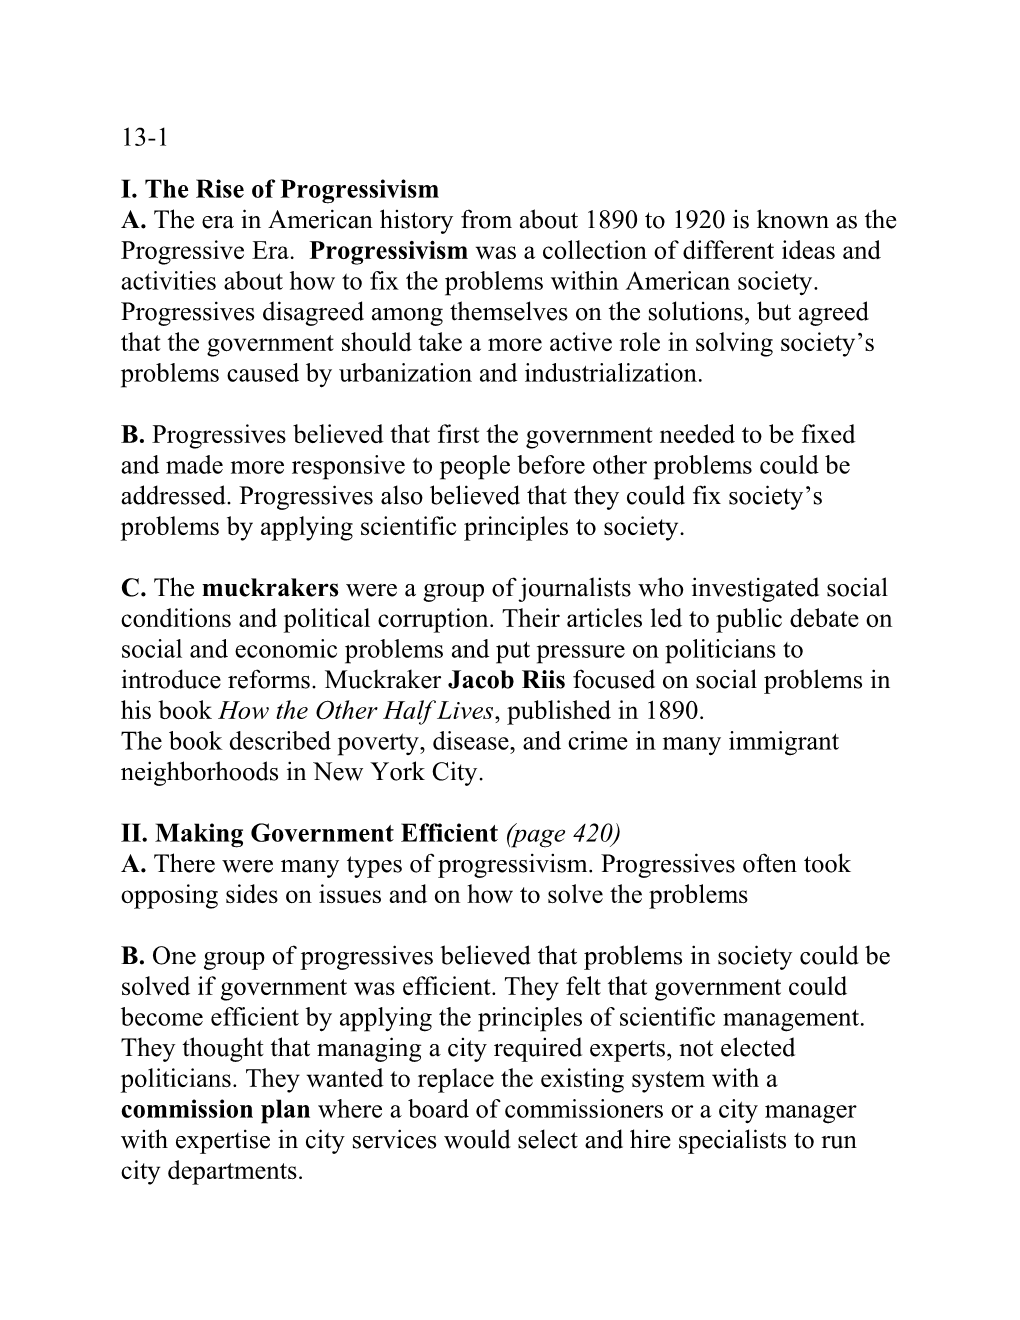 I. the Rise of Progressivism